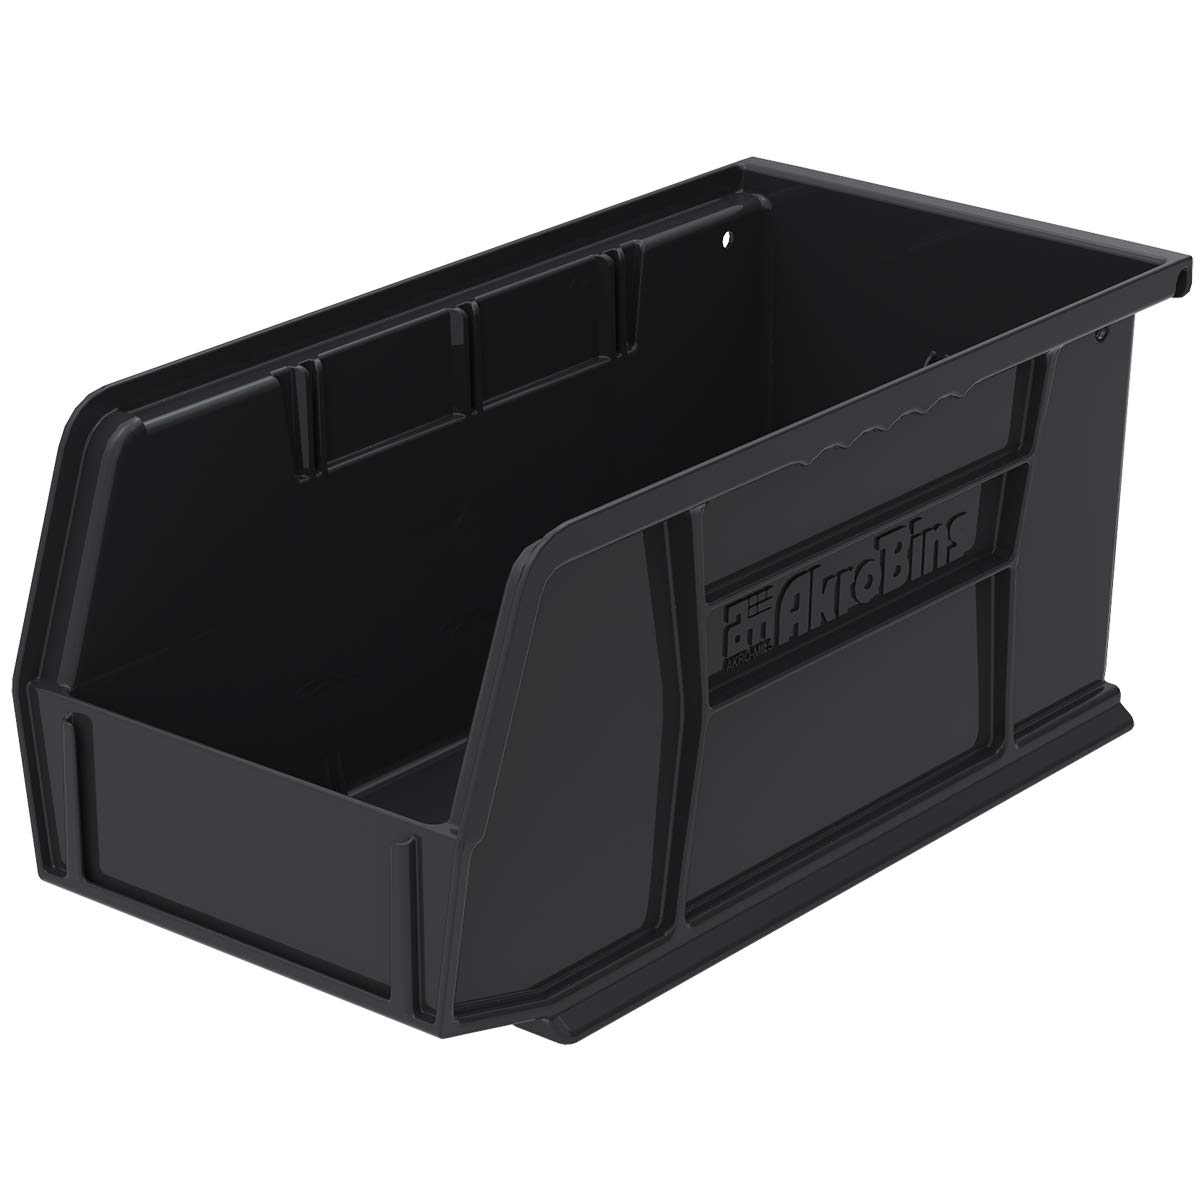 Akro-Mils 30230 صندوق تخزين منظم تخزين قابل للتكديس من البلاستيك AkroBins